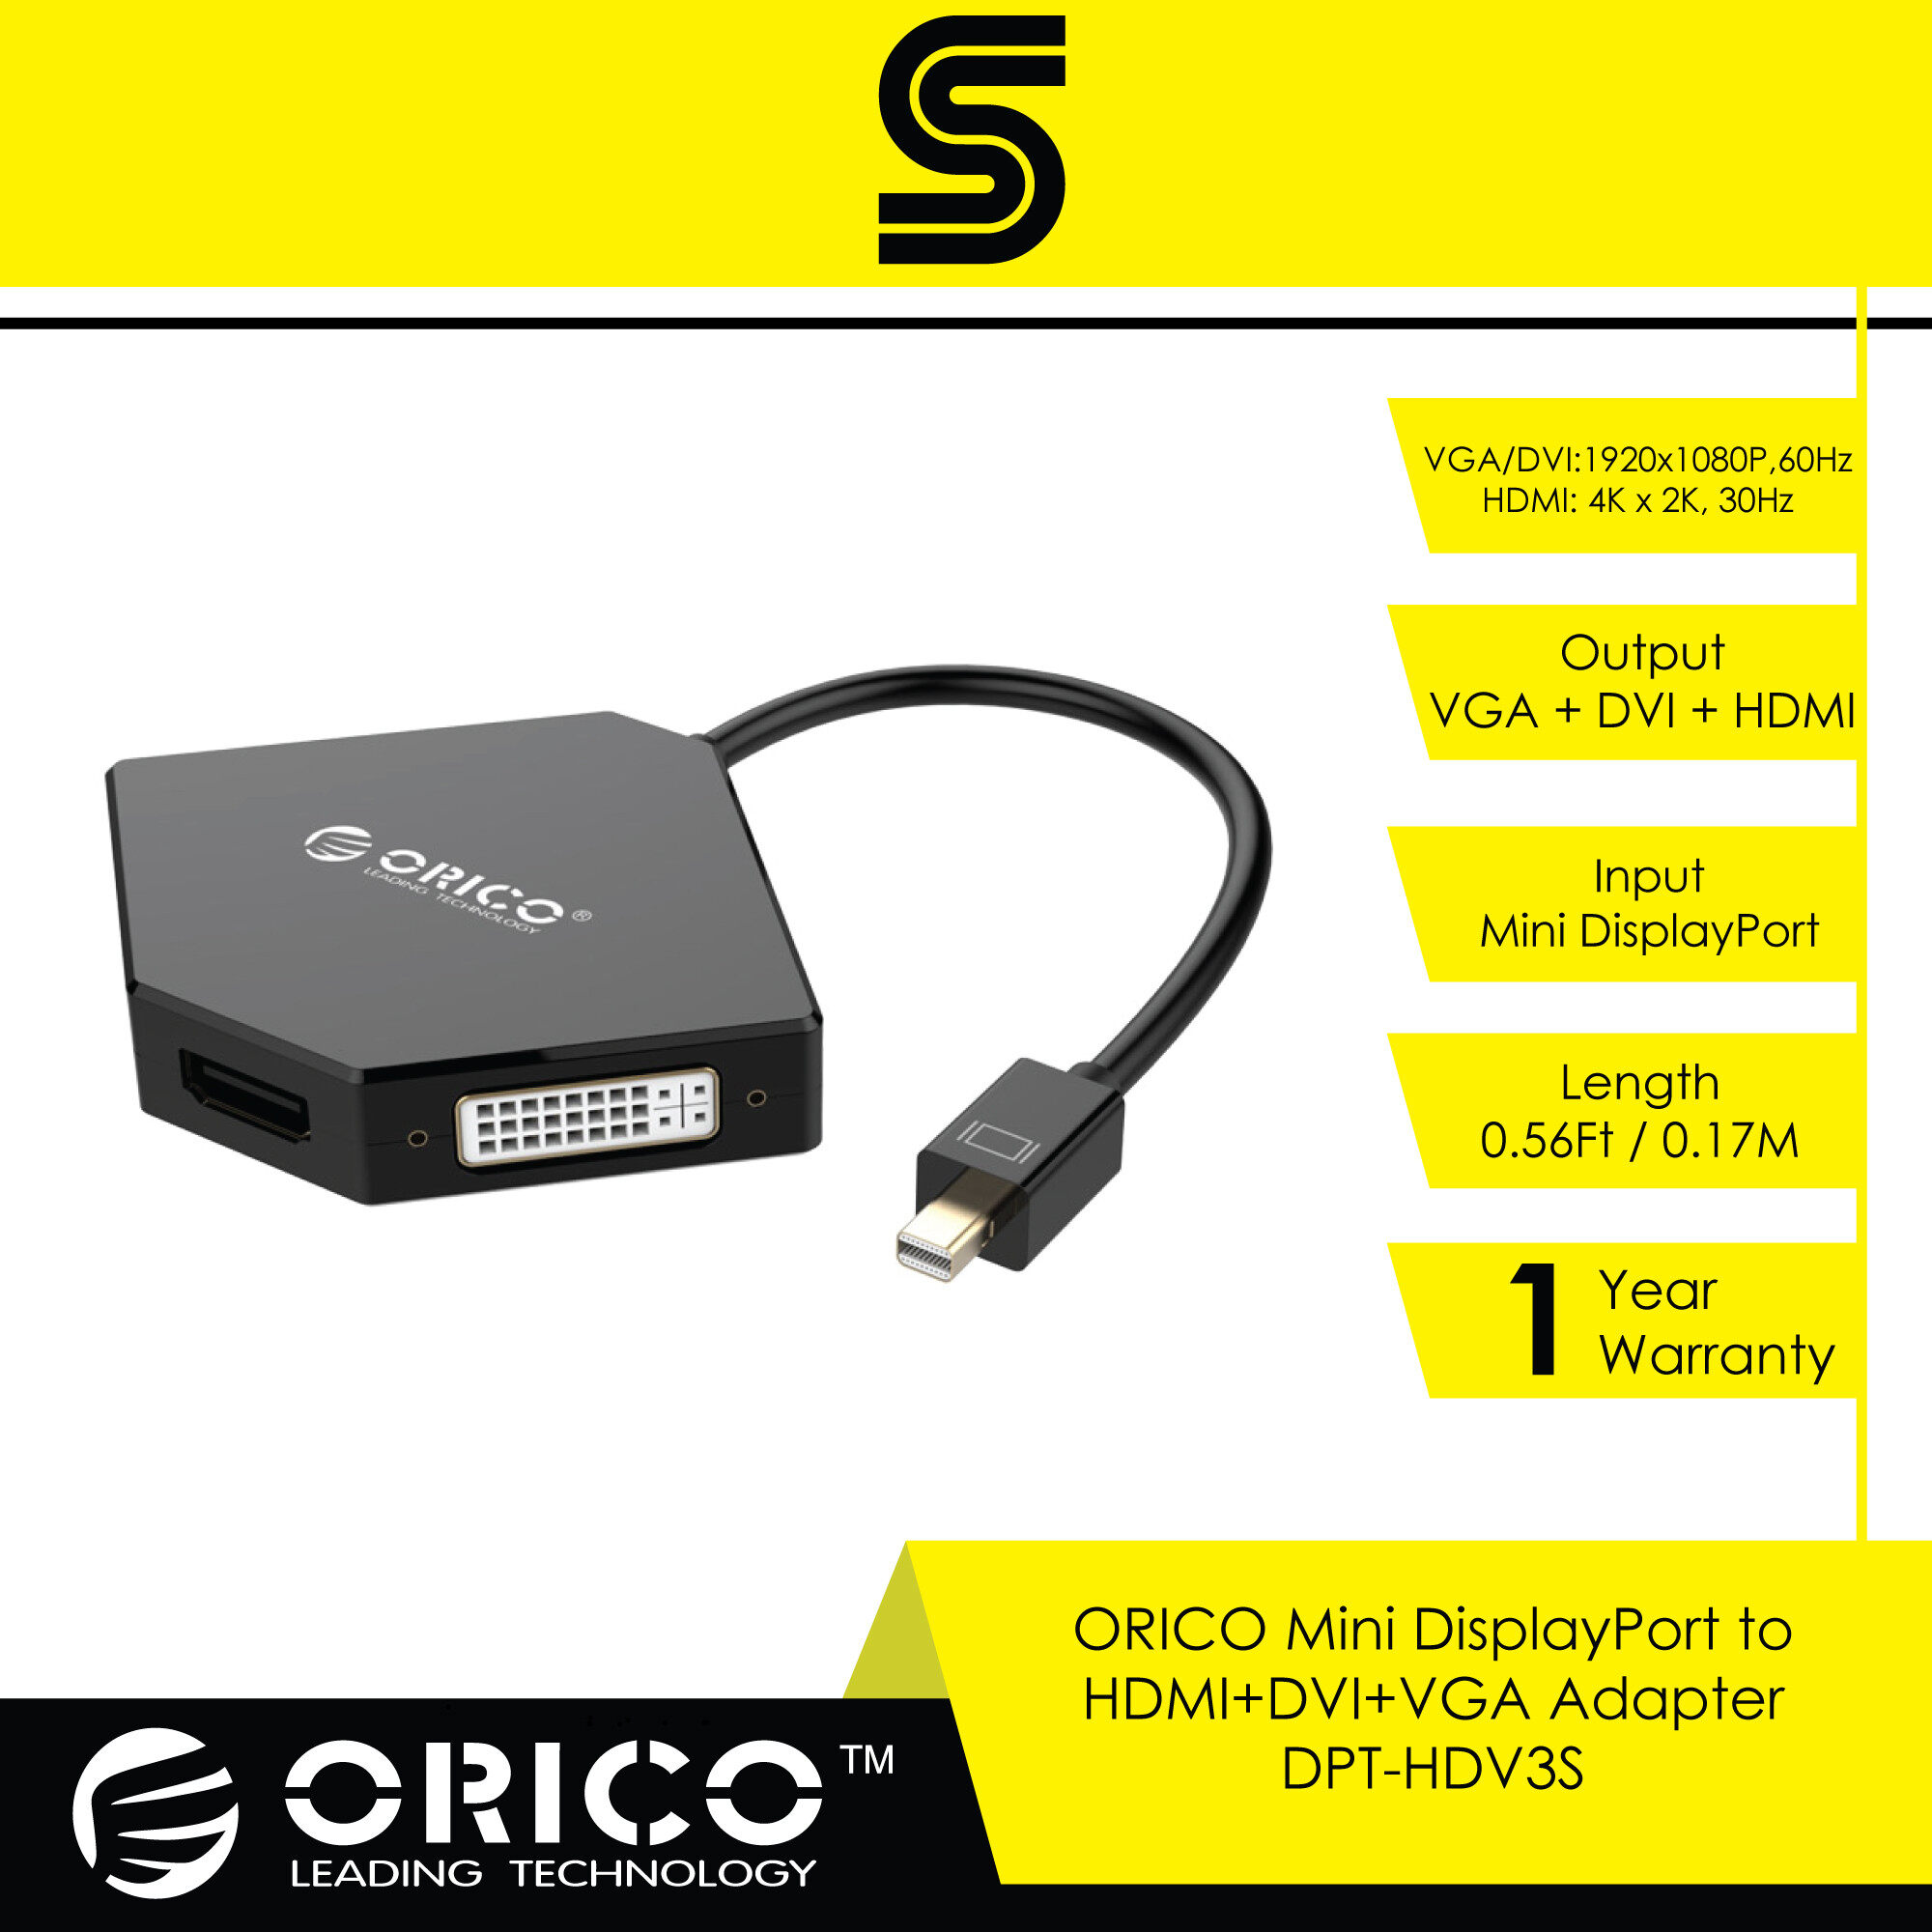 ORICO Mini DisplayPort to HDMI+DVI+VGA Adapter - DPT-HDV3S